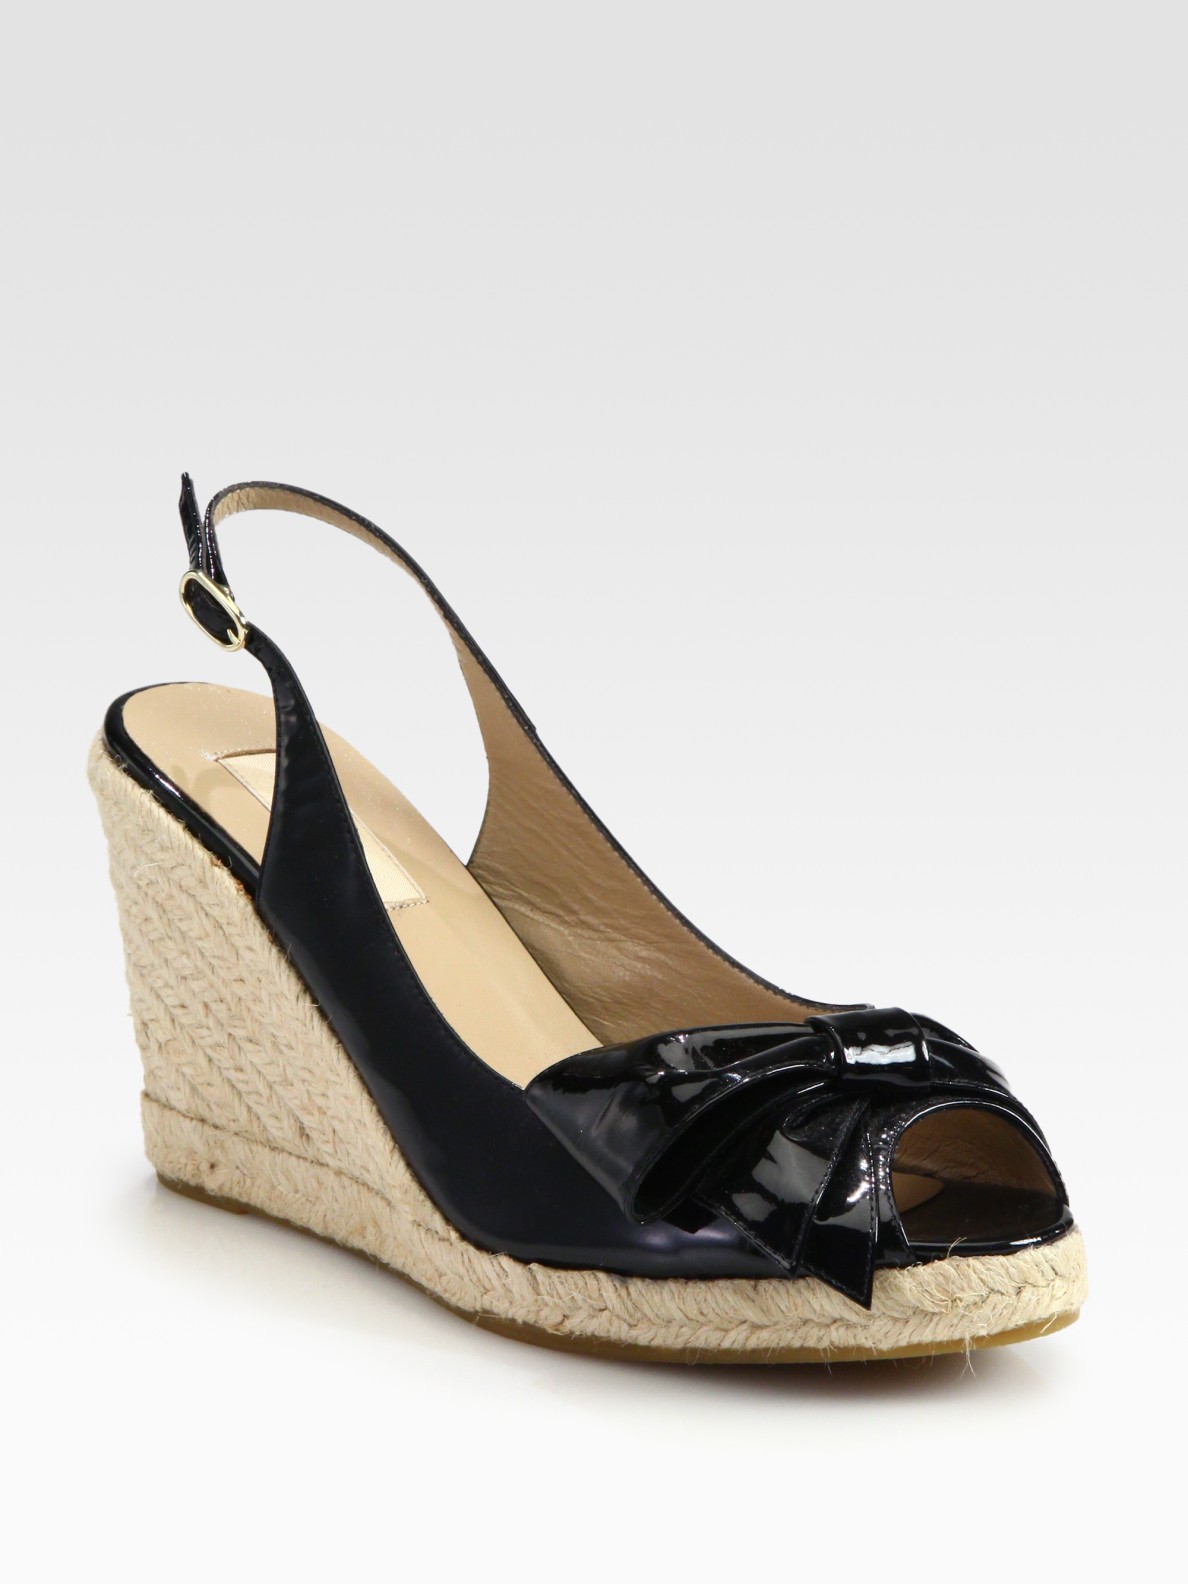 Valentino Mena Patent Leather Espadrille Wedge Sandals in Black | Lyst